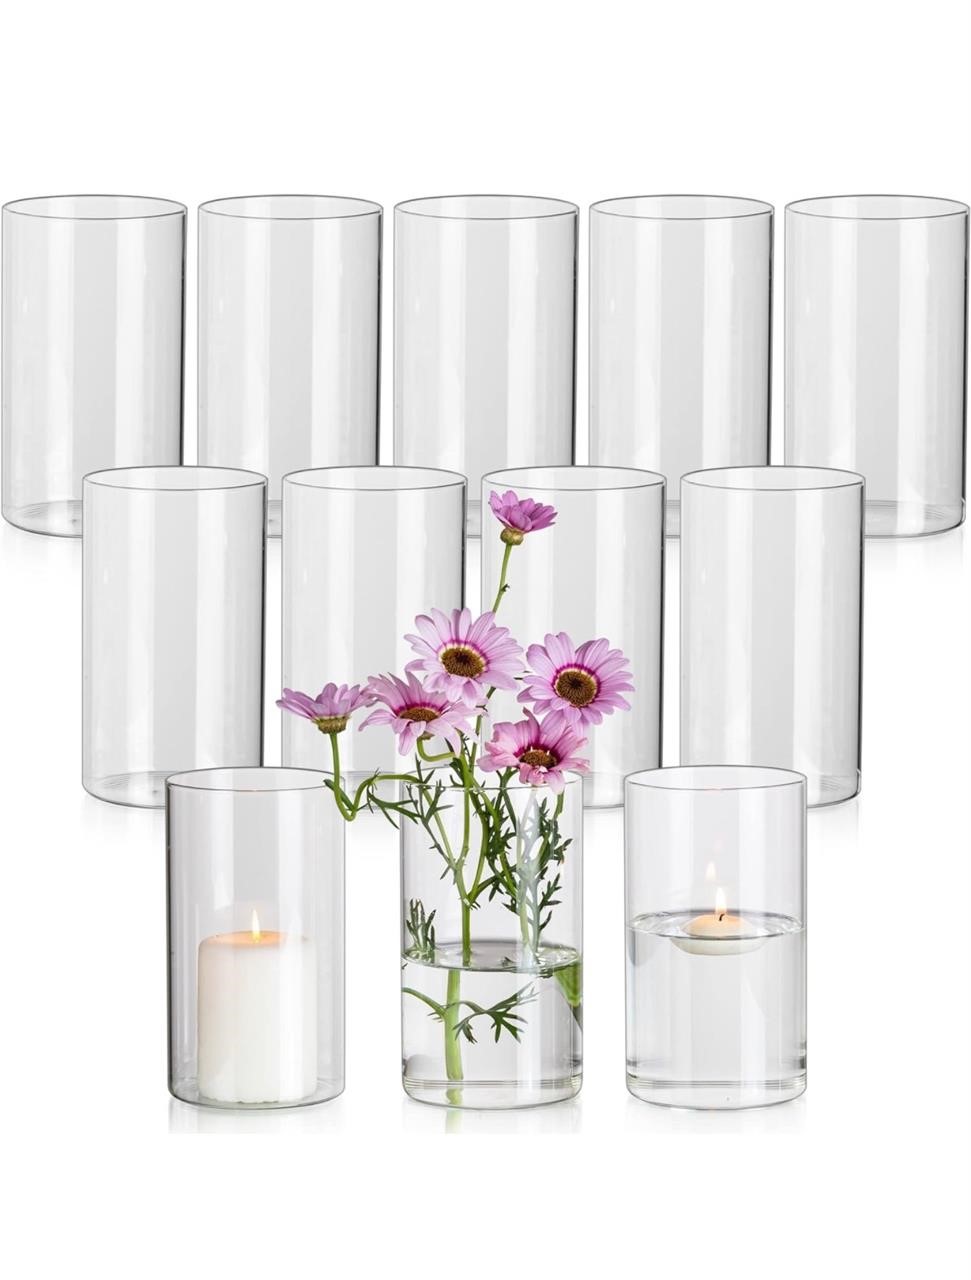 NEW $97 (4") 12-Pcs Glass Cylinder Vases